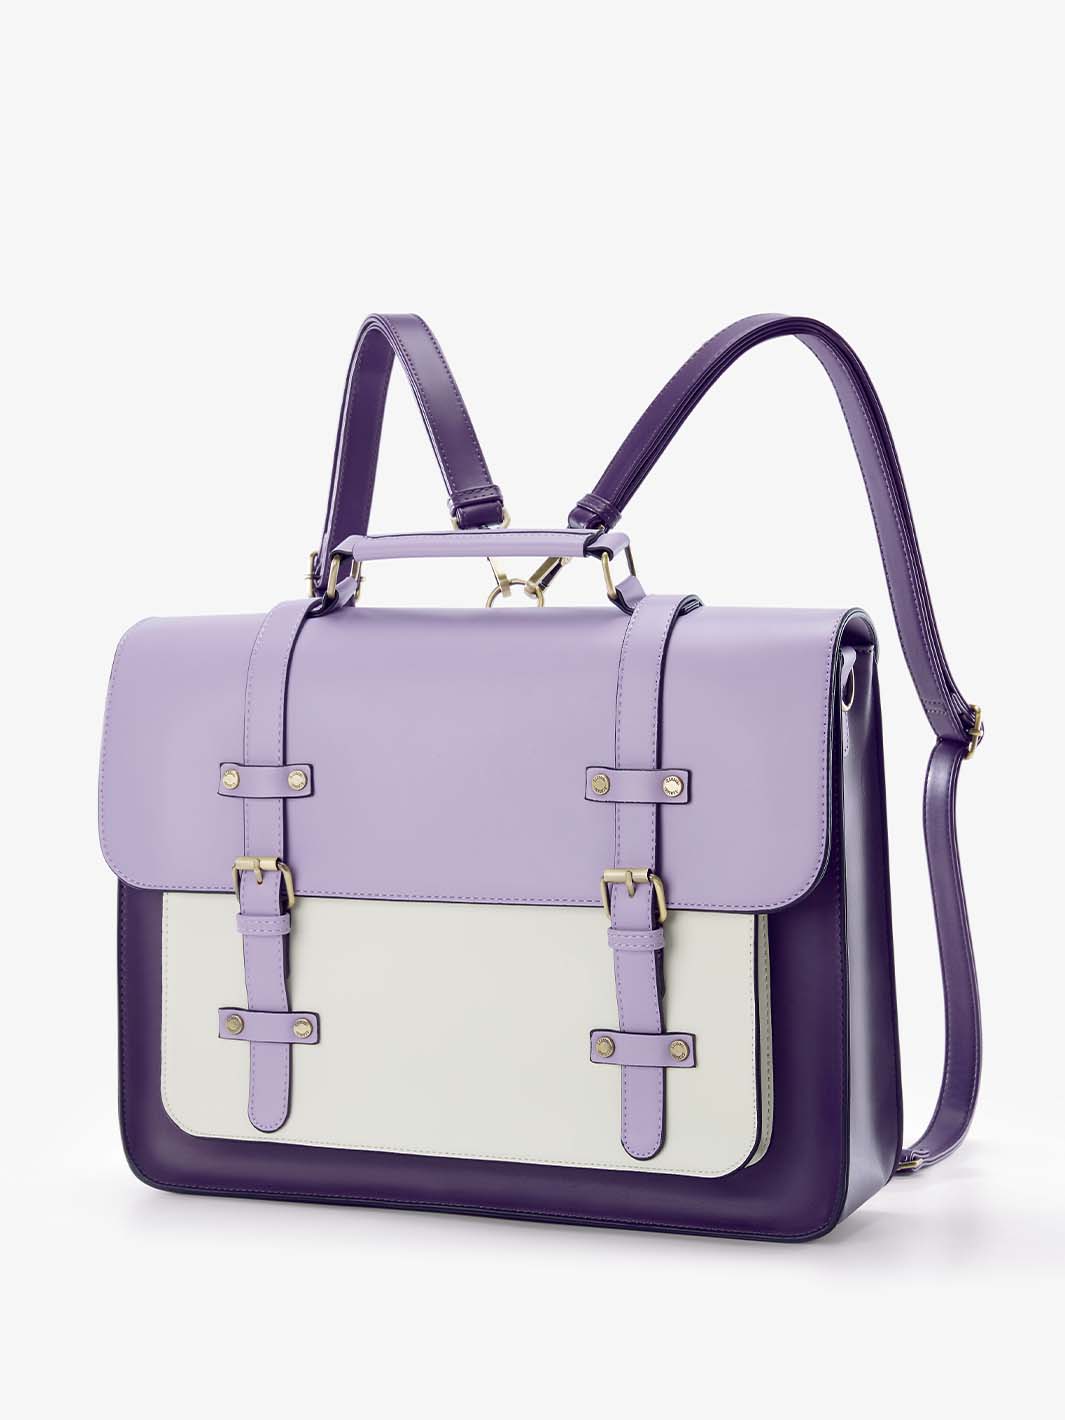 Sombre Vintage Briefcase - Light Violet/Cheese color